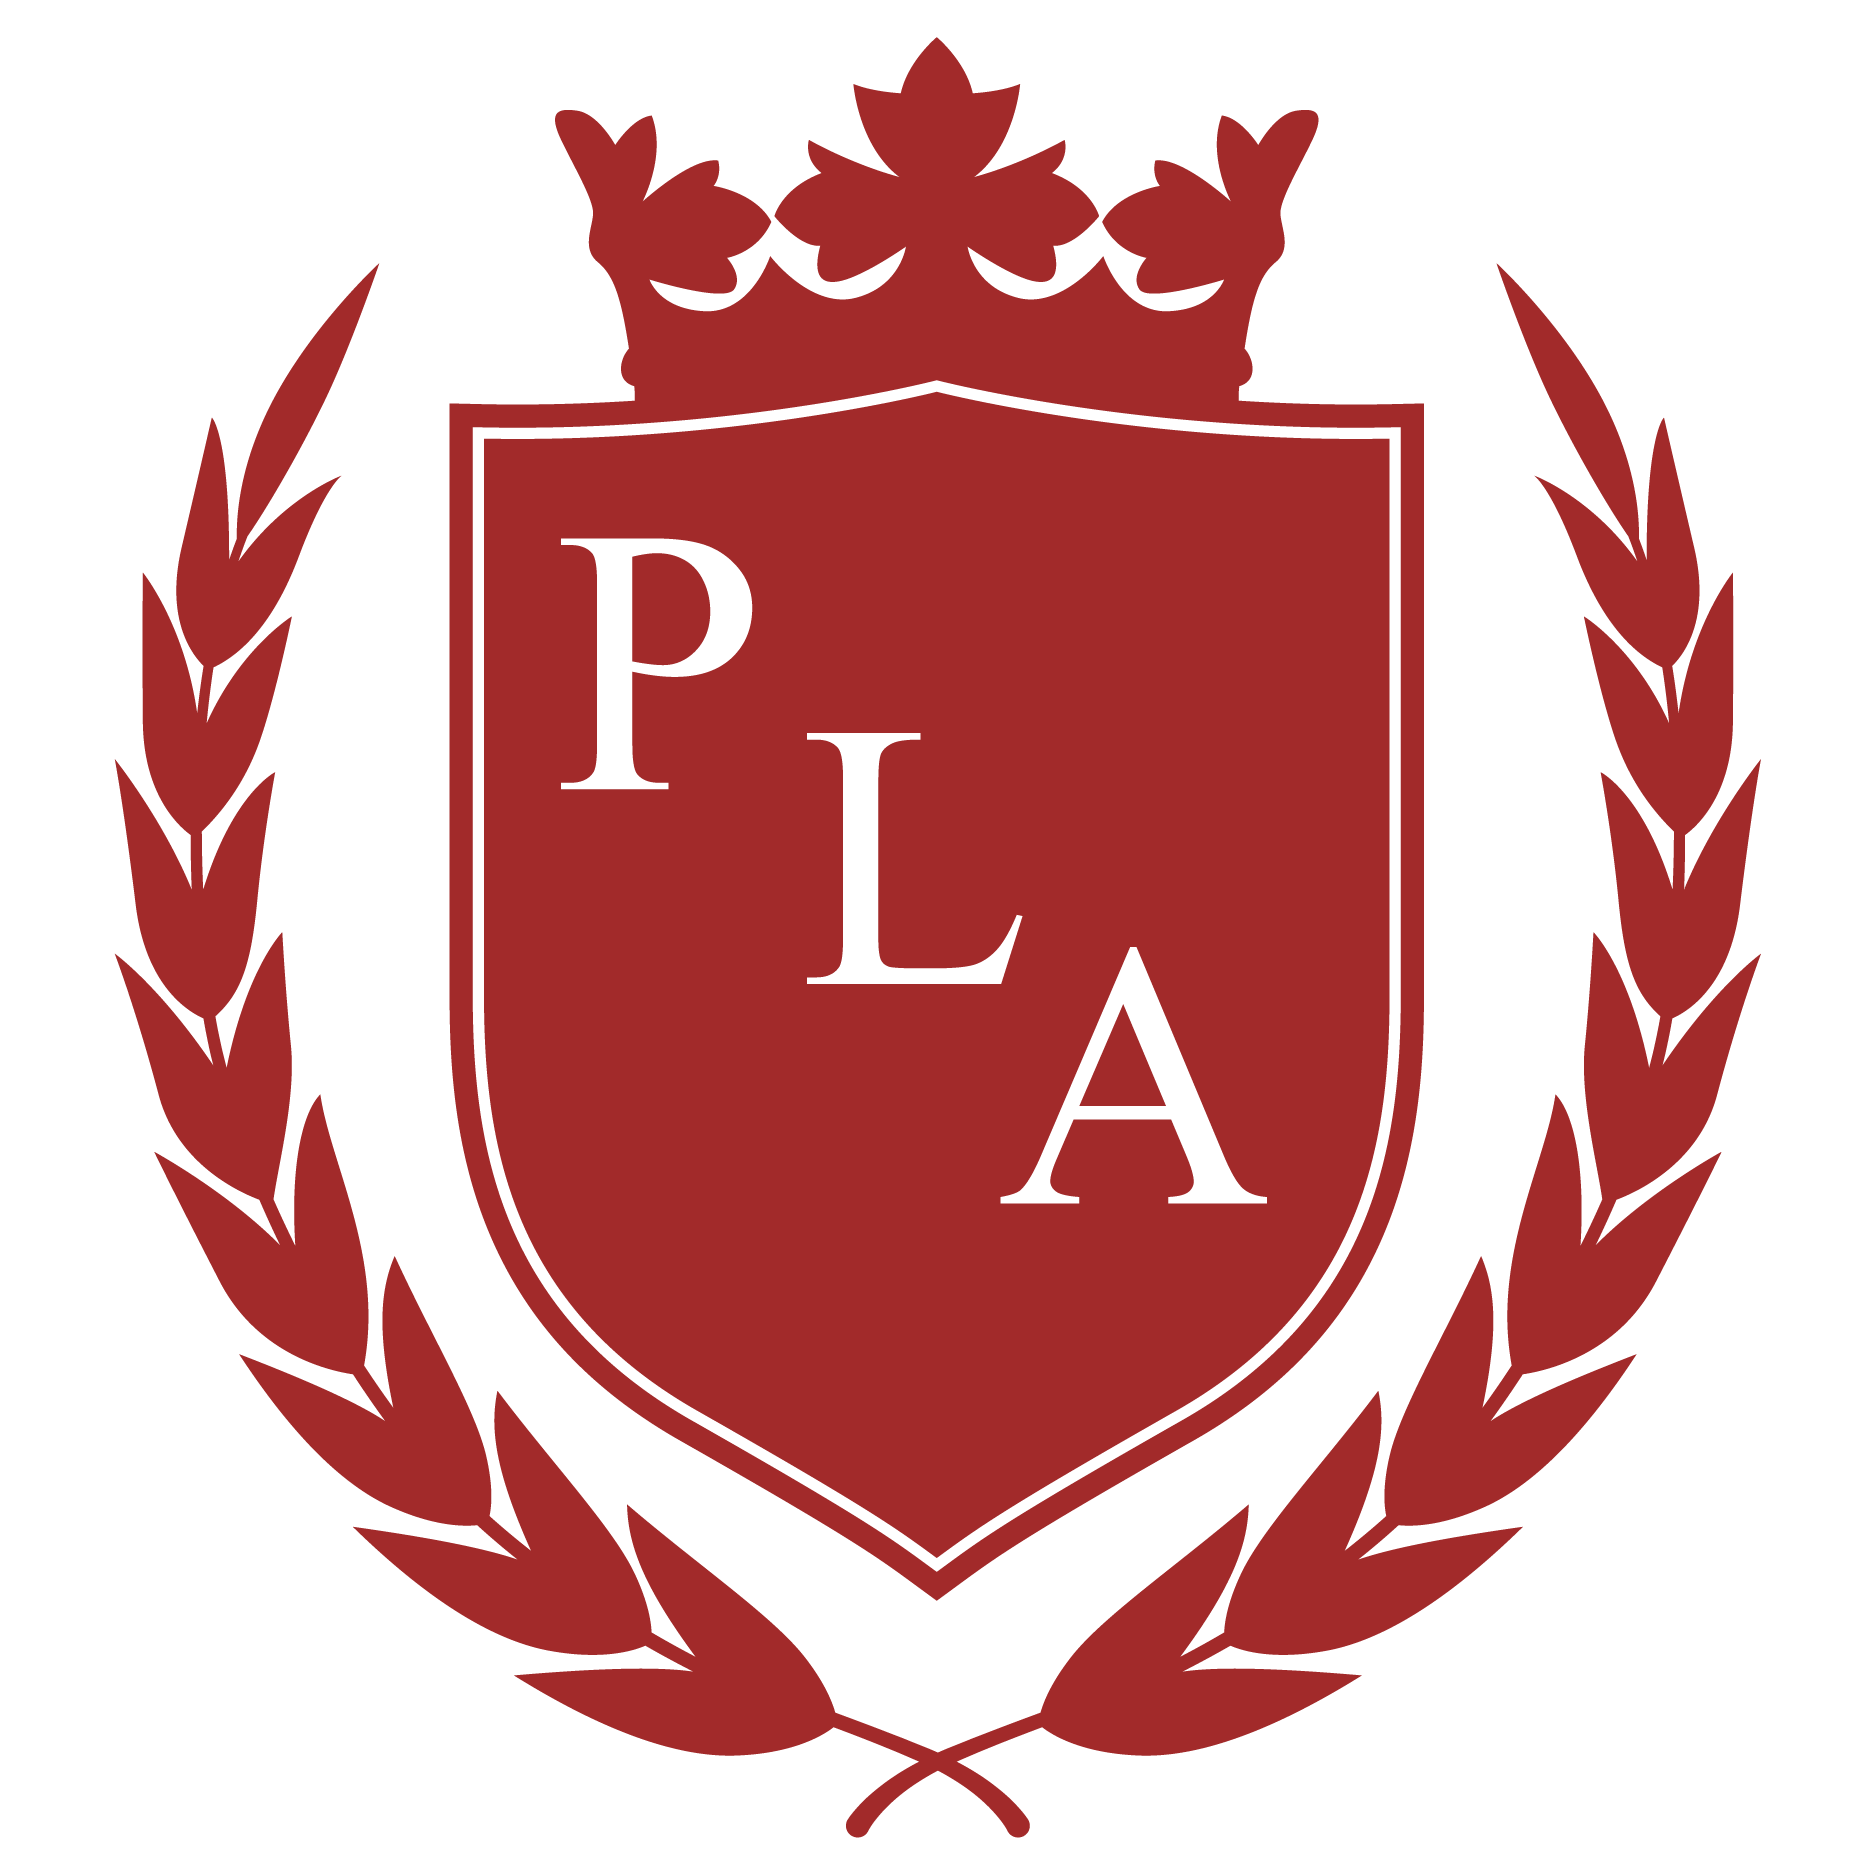 Phalen Leadership Academies logo